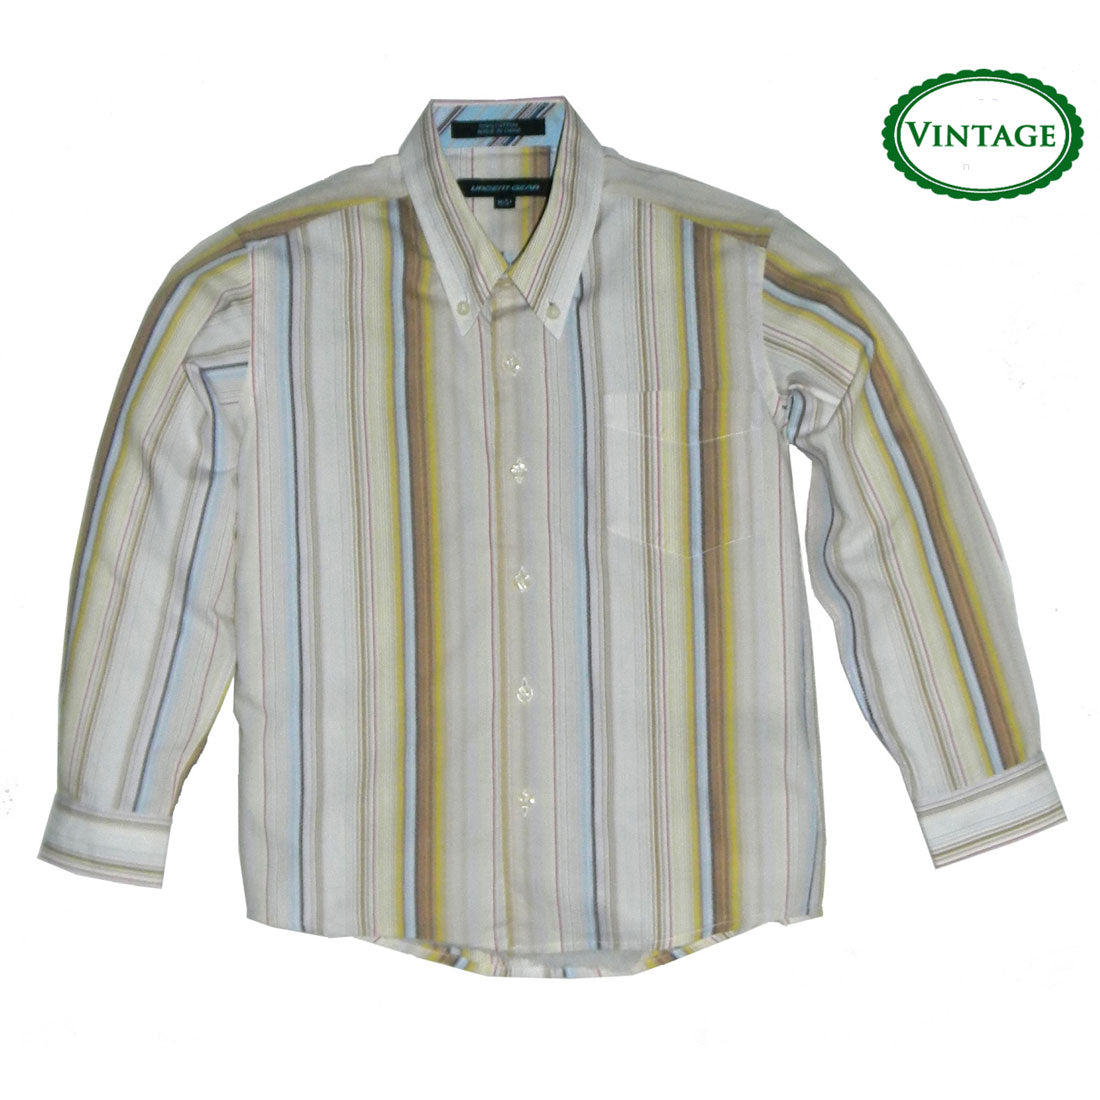 Boys Vintage Striped Button Down Shirt by Urgent Gear